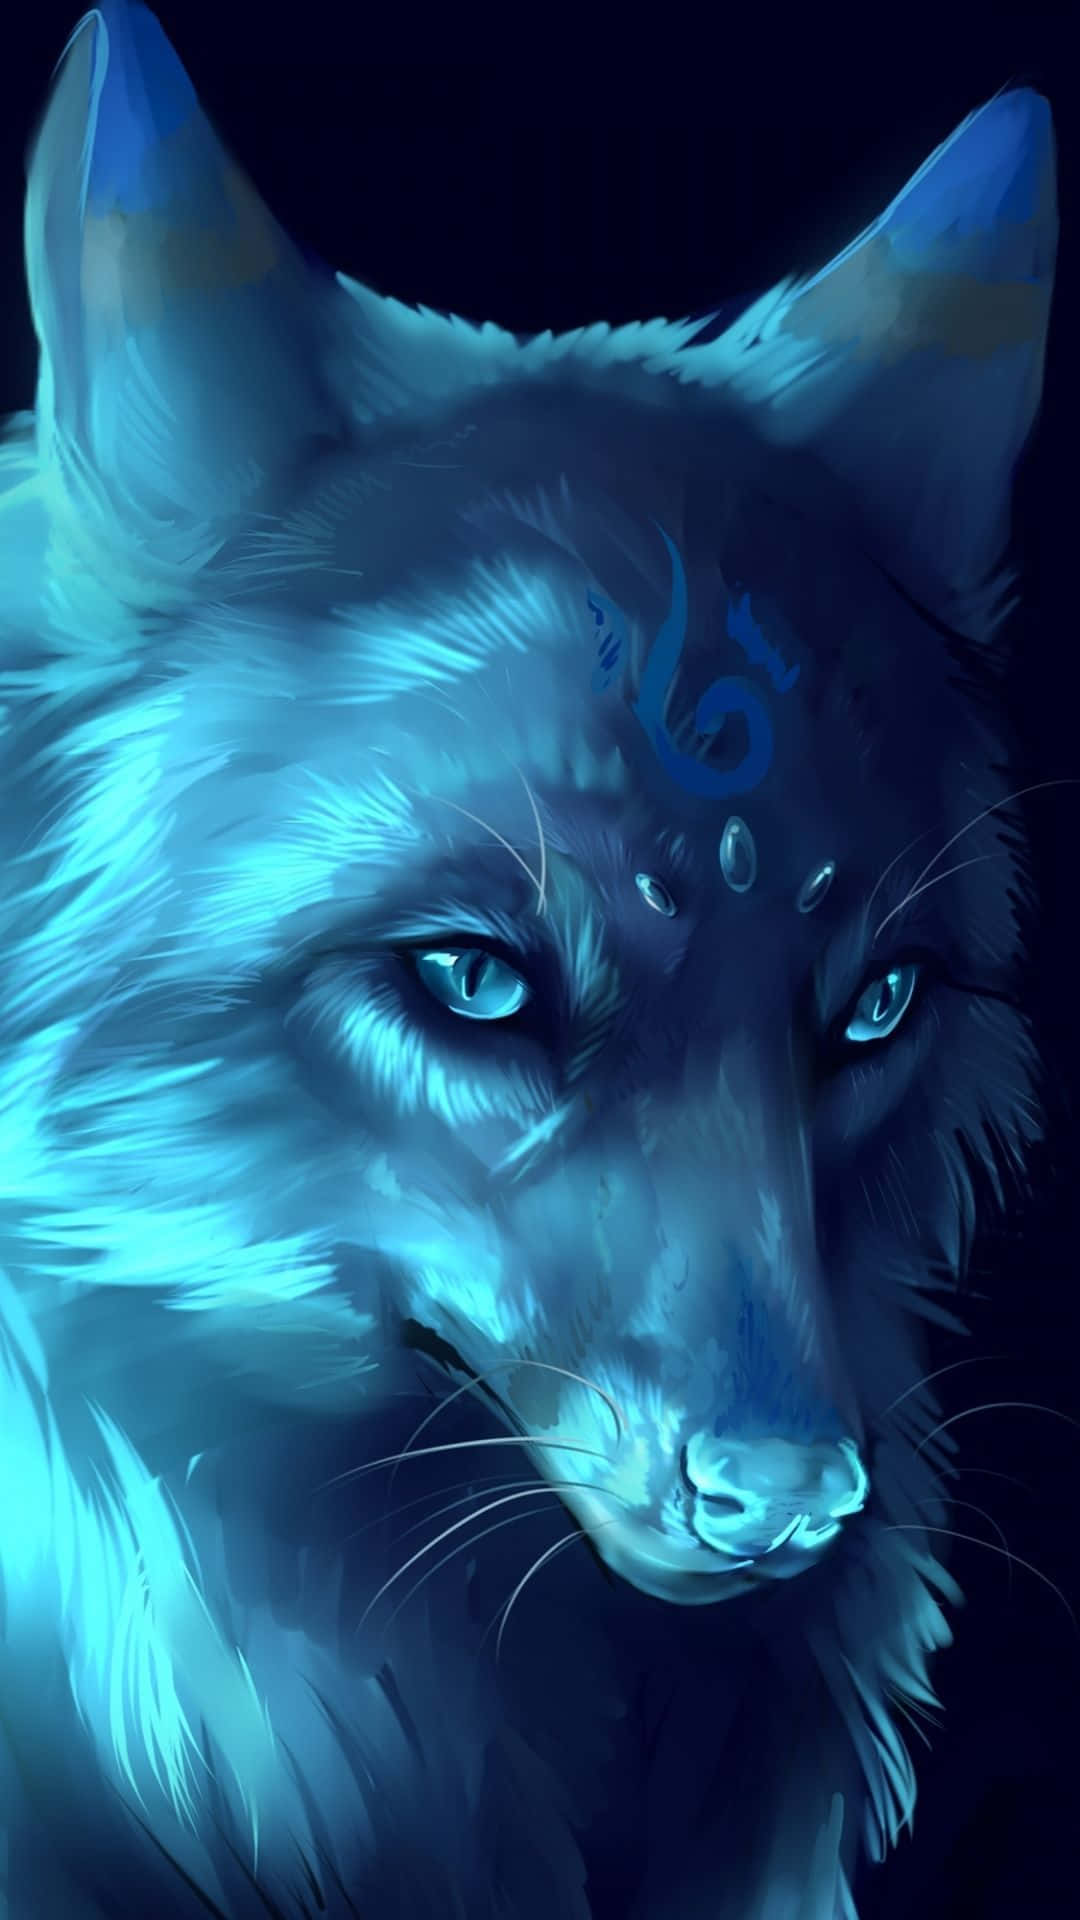 En blå ulv med blå øjne og en lys gule måne i et midnat himmel. Wallpaper